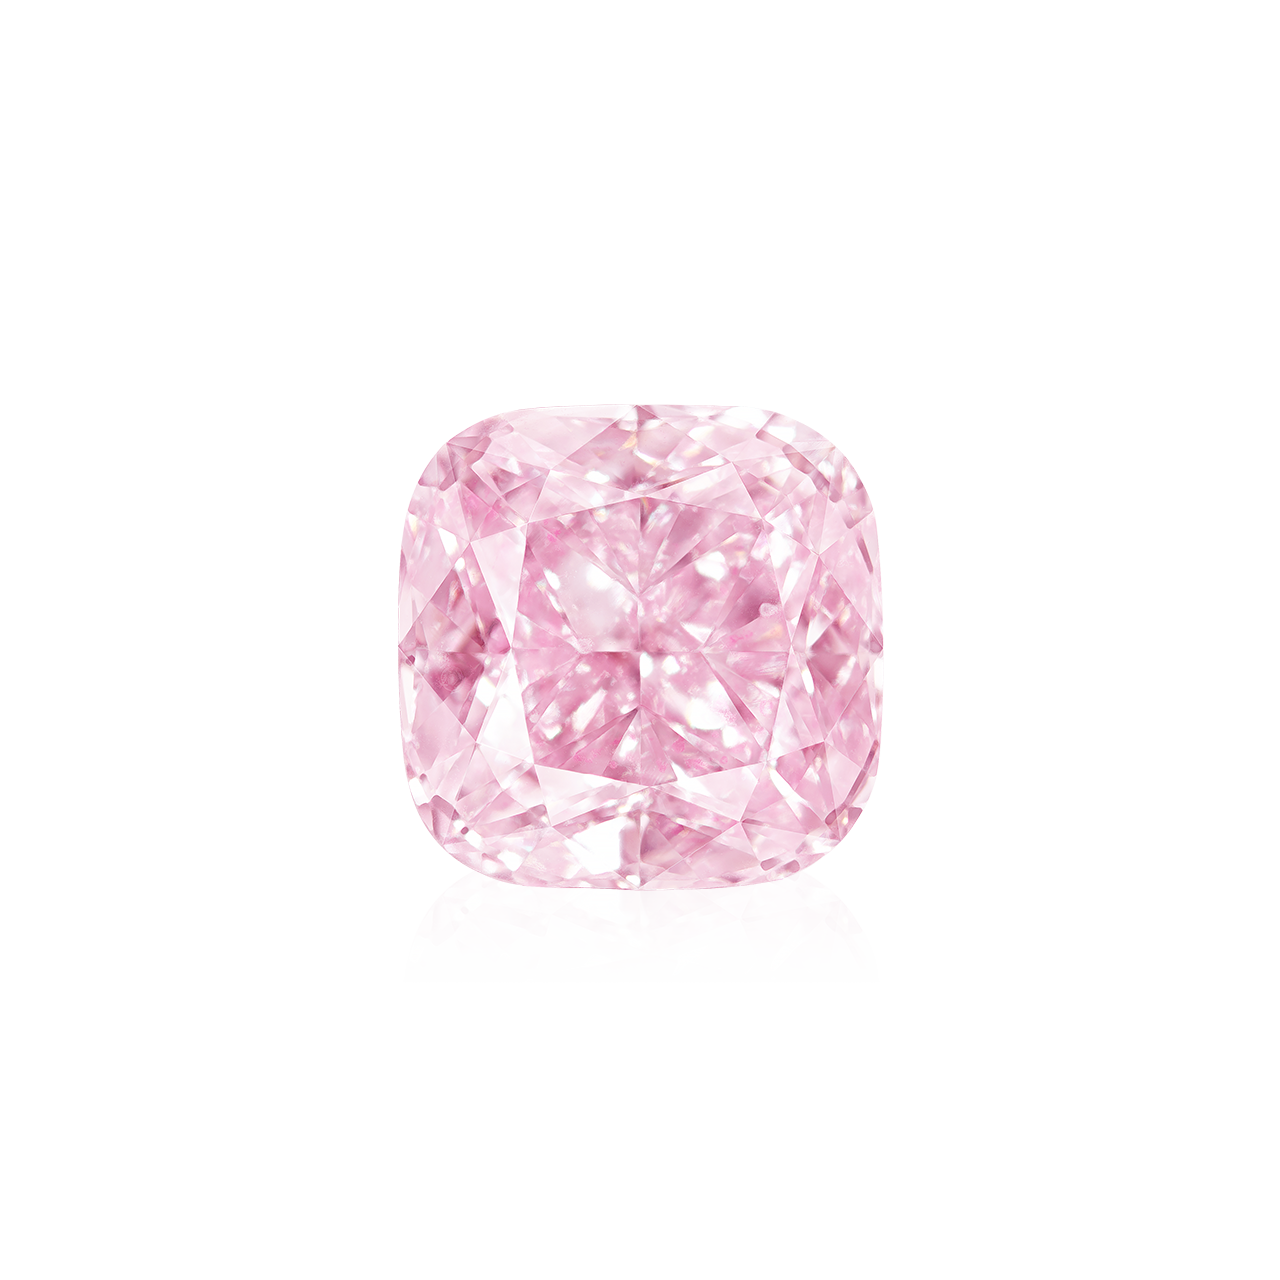 GIA 12.05克拉粉鑽裸石
Very Light Pink Diamond